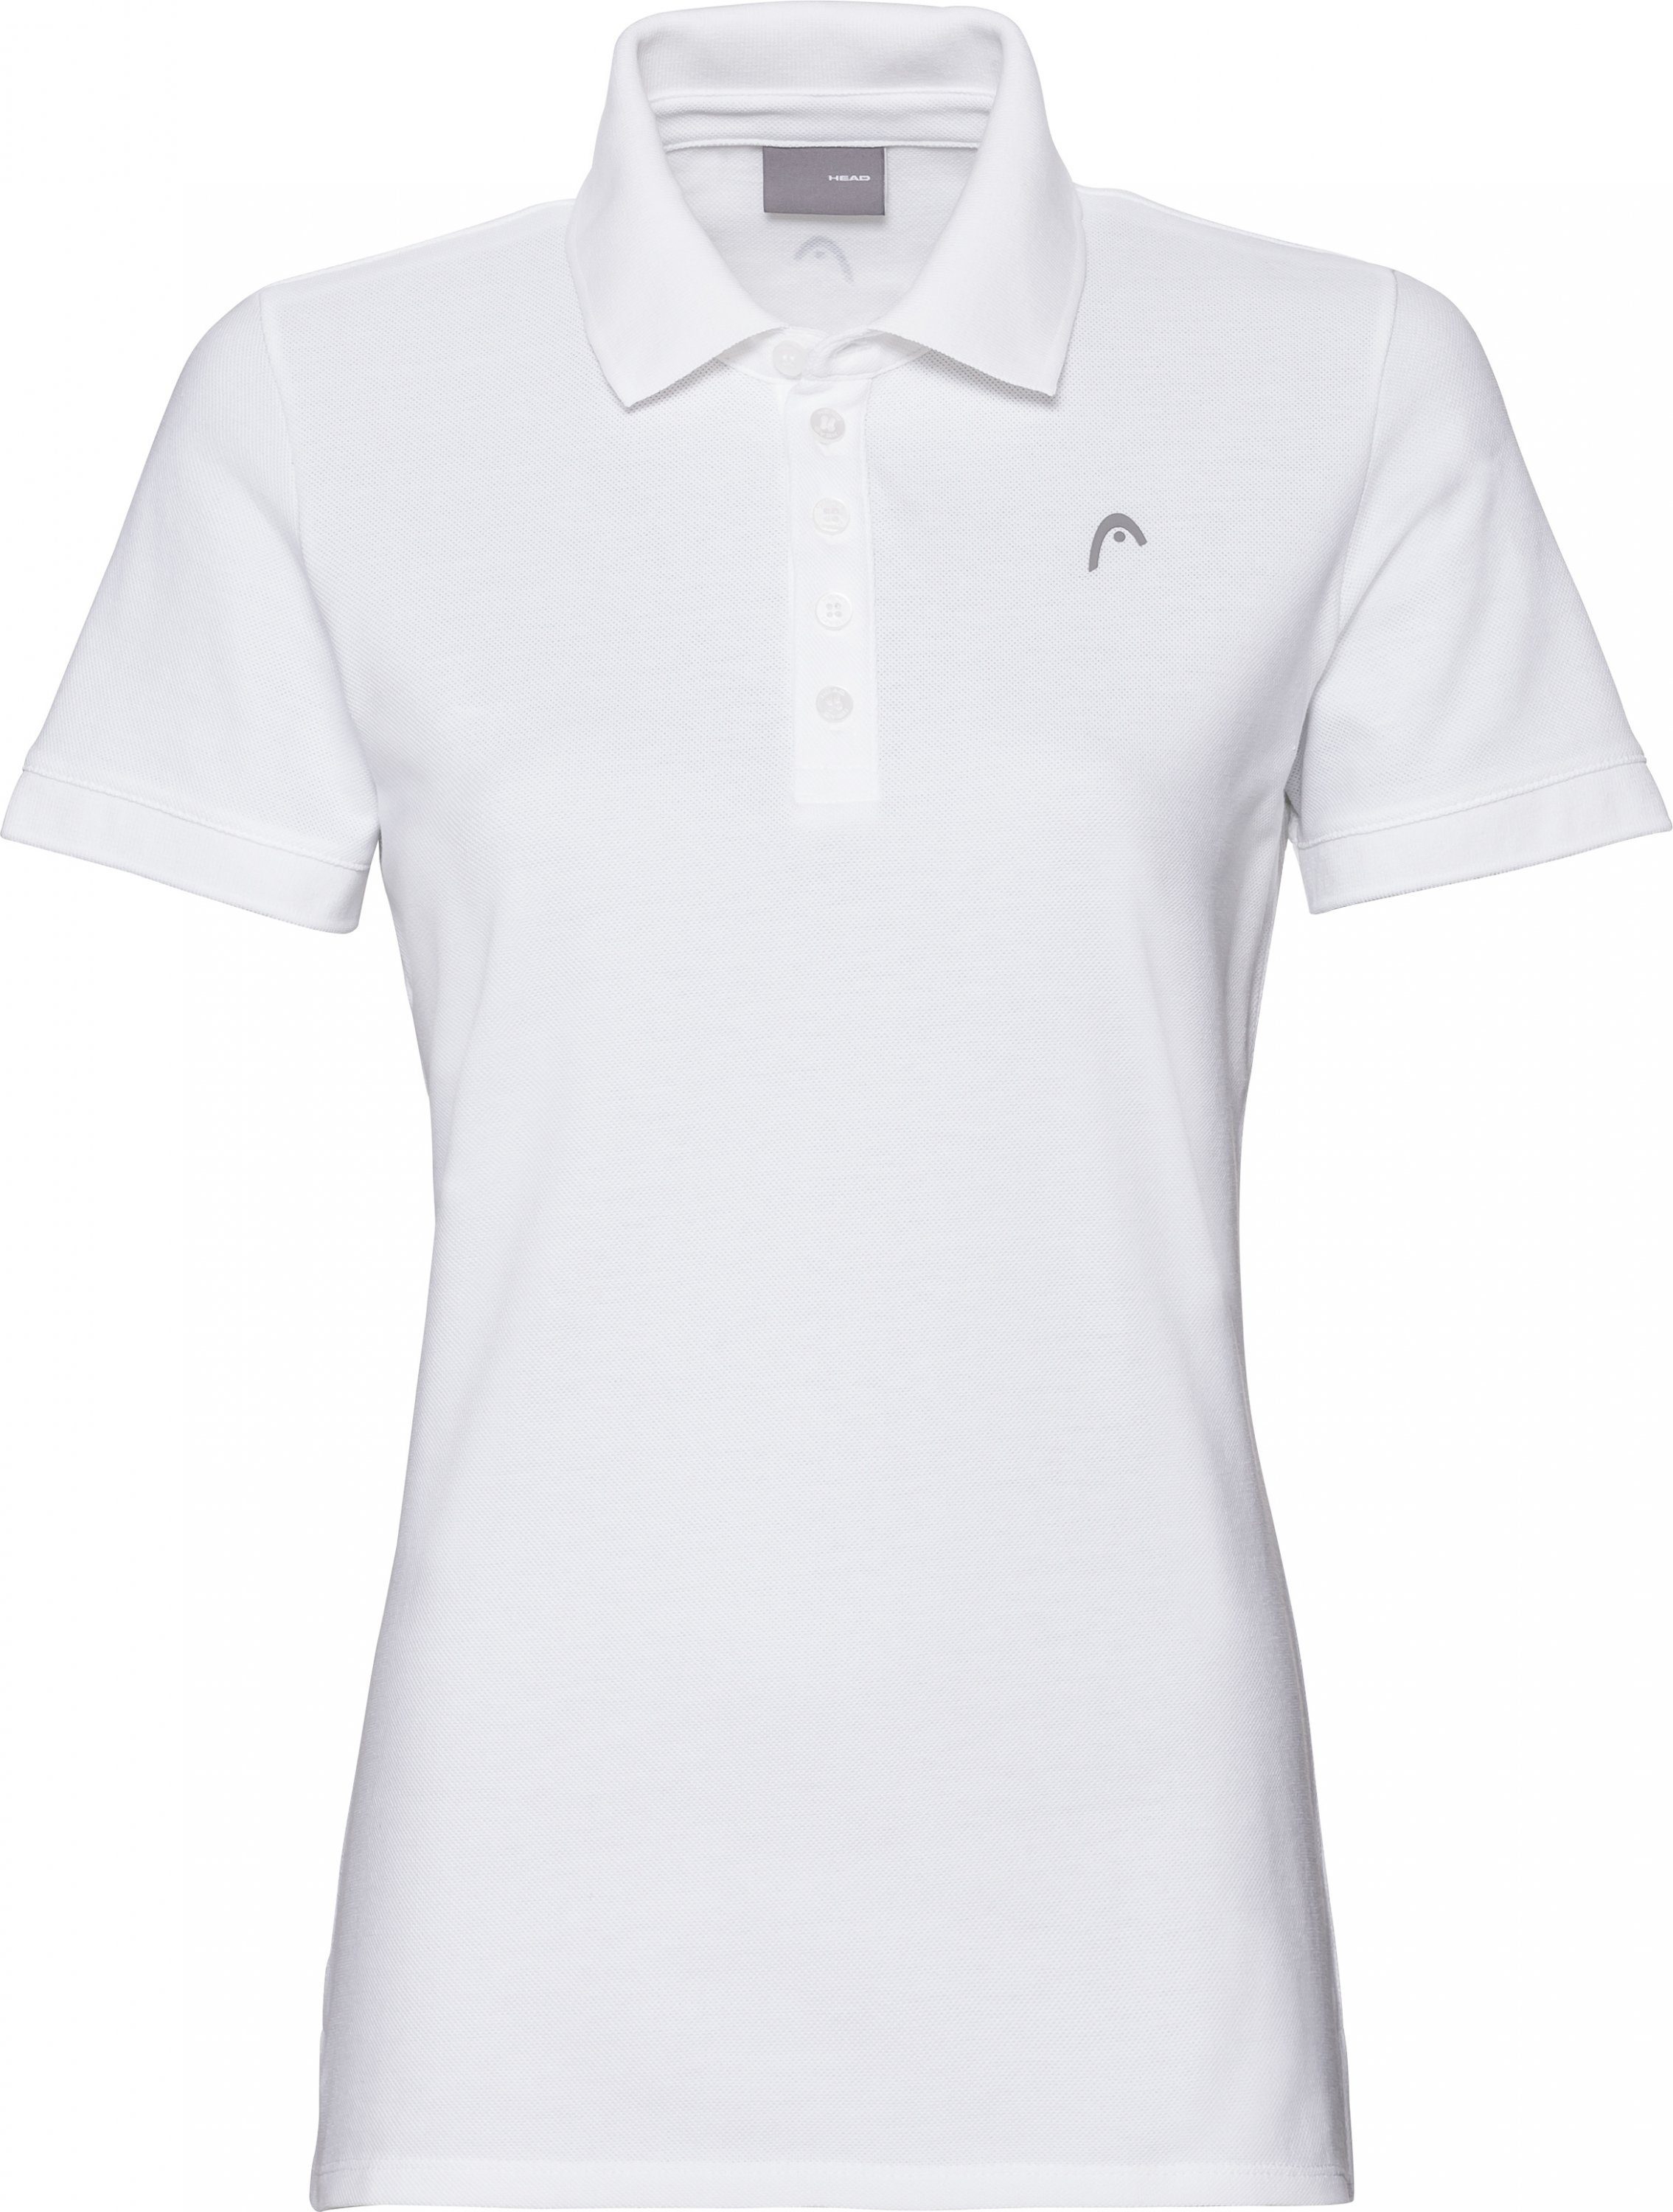 Head Tennisshirt Head Damen Polo Shirt